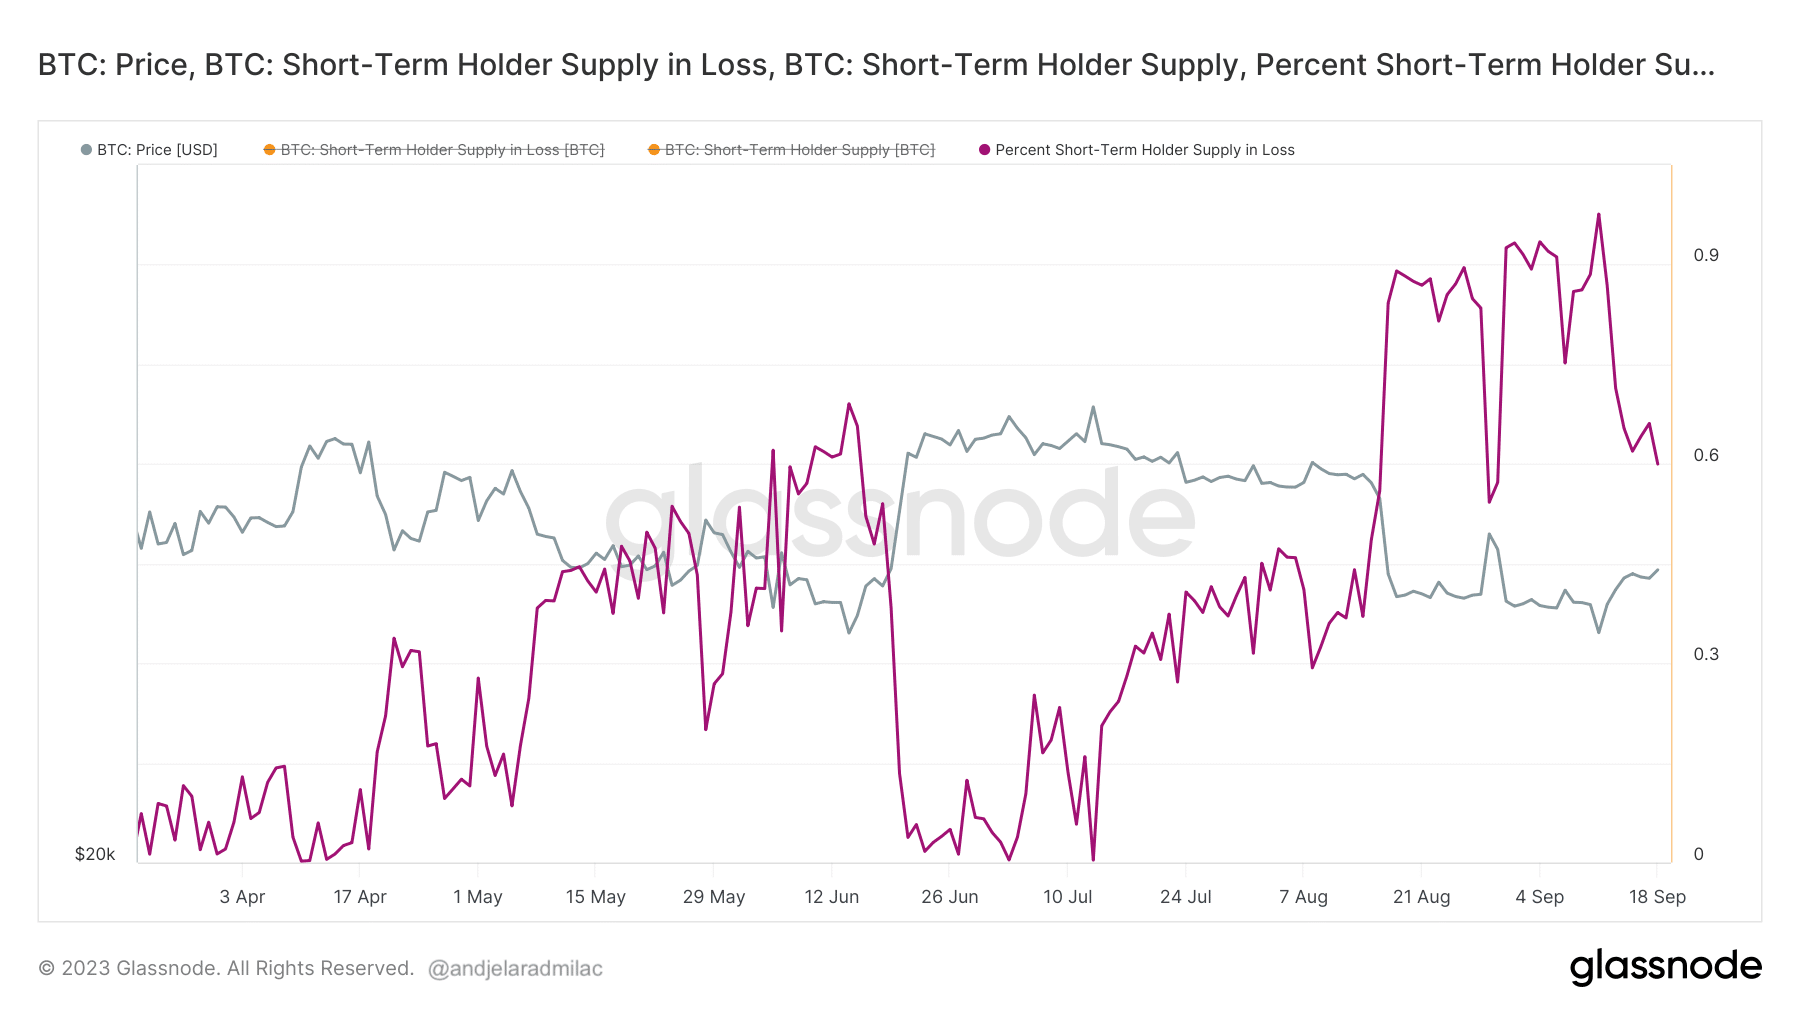 percent short-term holder supply in loss march september